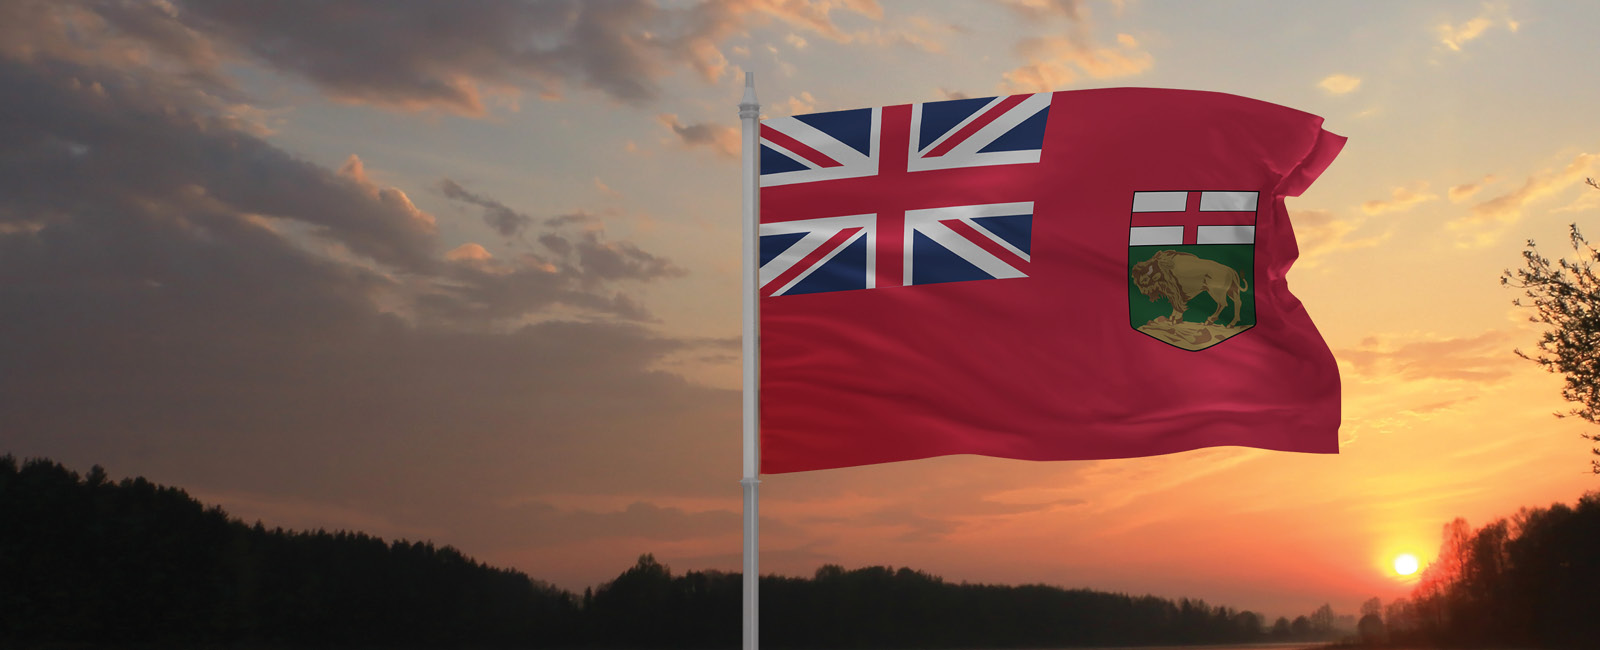 Manitoba flag flying in sunset